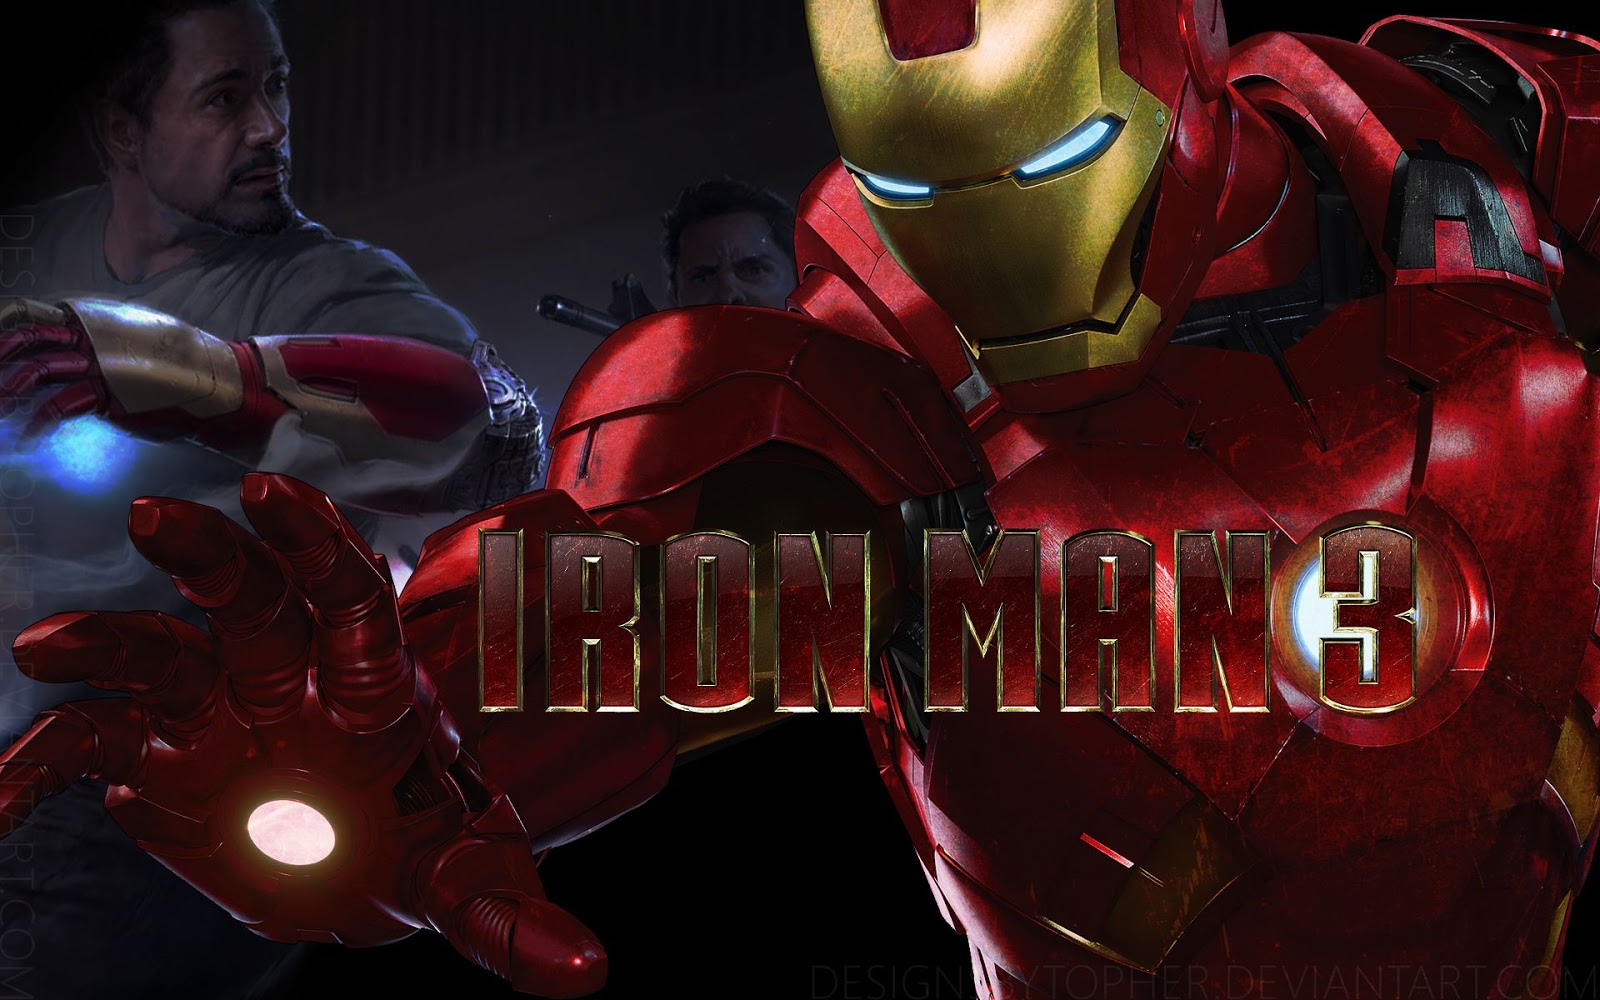 https://blogger.googleusercontent.com/img/b/R29vZ2xl/AVvXsEjFCMcy5JXAHFfbVmTddEFdjYy7UDnjjSbffqJjzVuTOJQfhQvikonrzEOwZgy3IxWYGZvLWNKozSDr3oGa9z3L9q1YUJ5Bjo5UXLF7woQIBsLgqhGoEVV5NZhTBkOn1mgswSdJLnHMtbU/s1600/Iron-Man-3.jpg